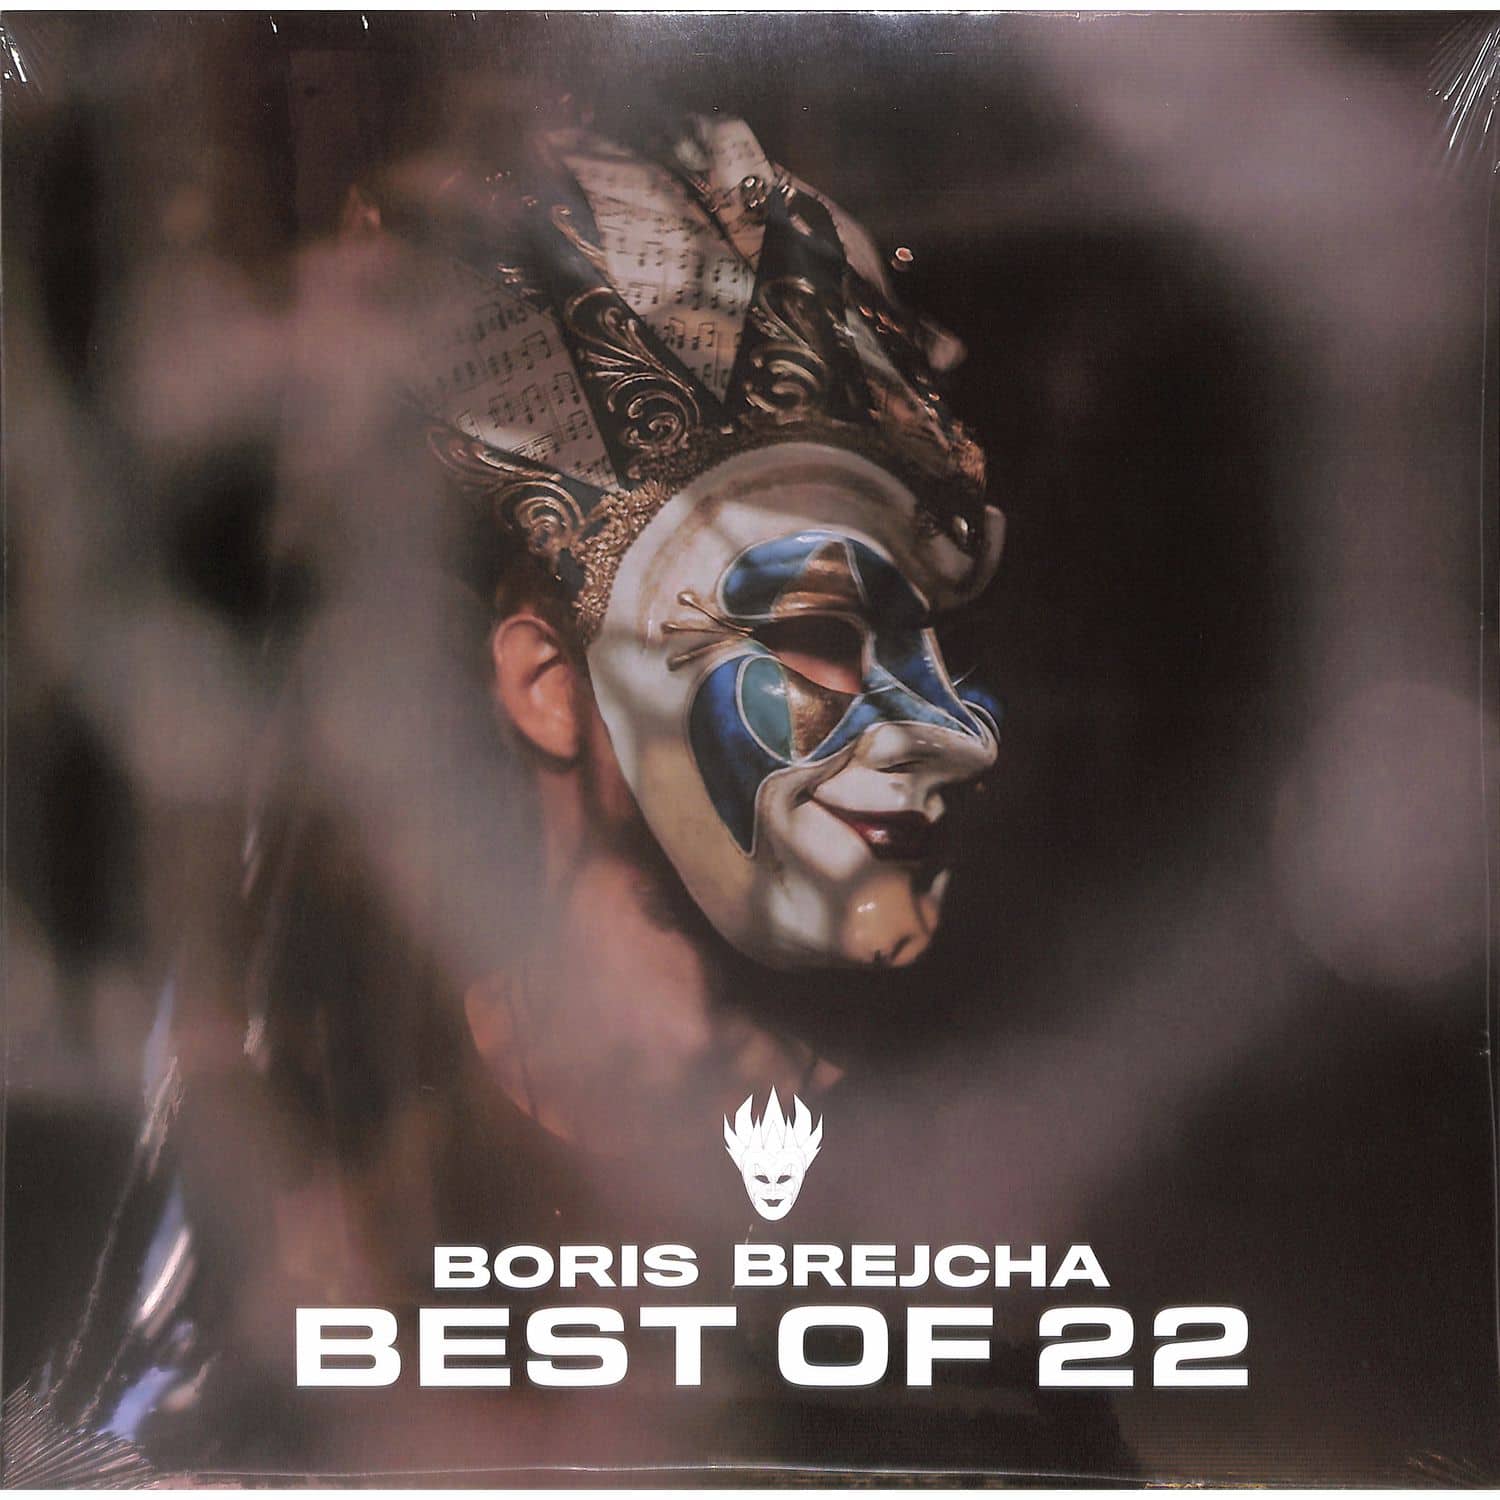 Boris Brejcha - BEST OF 22